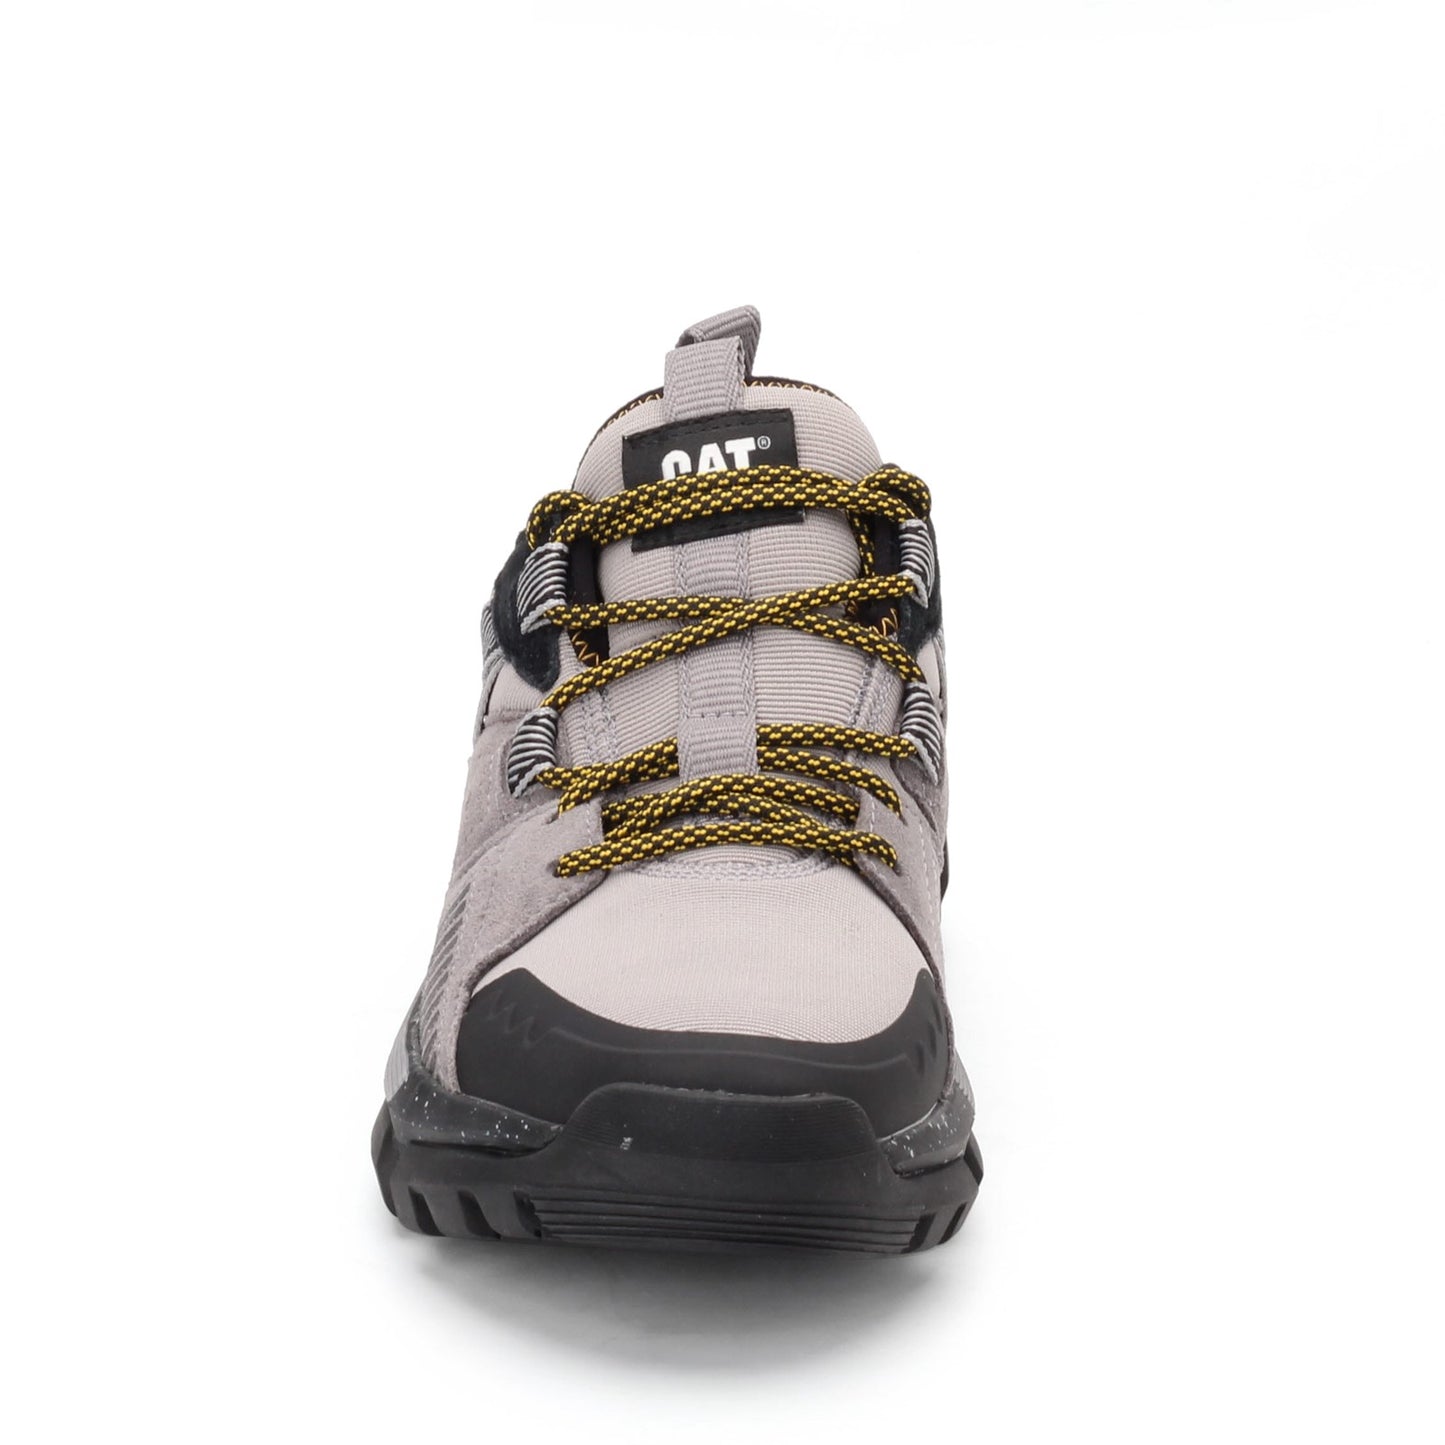 Peltz Shoes  Unisex Caterpillar Raider Sport Work Shoe - Wide Width GREY BLACK P724509